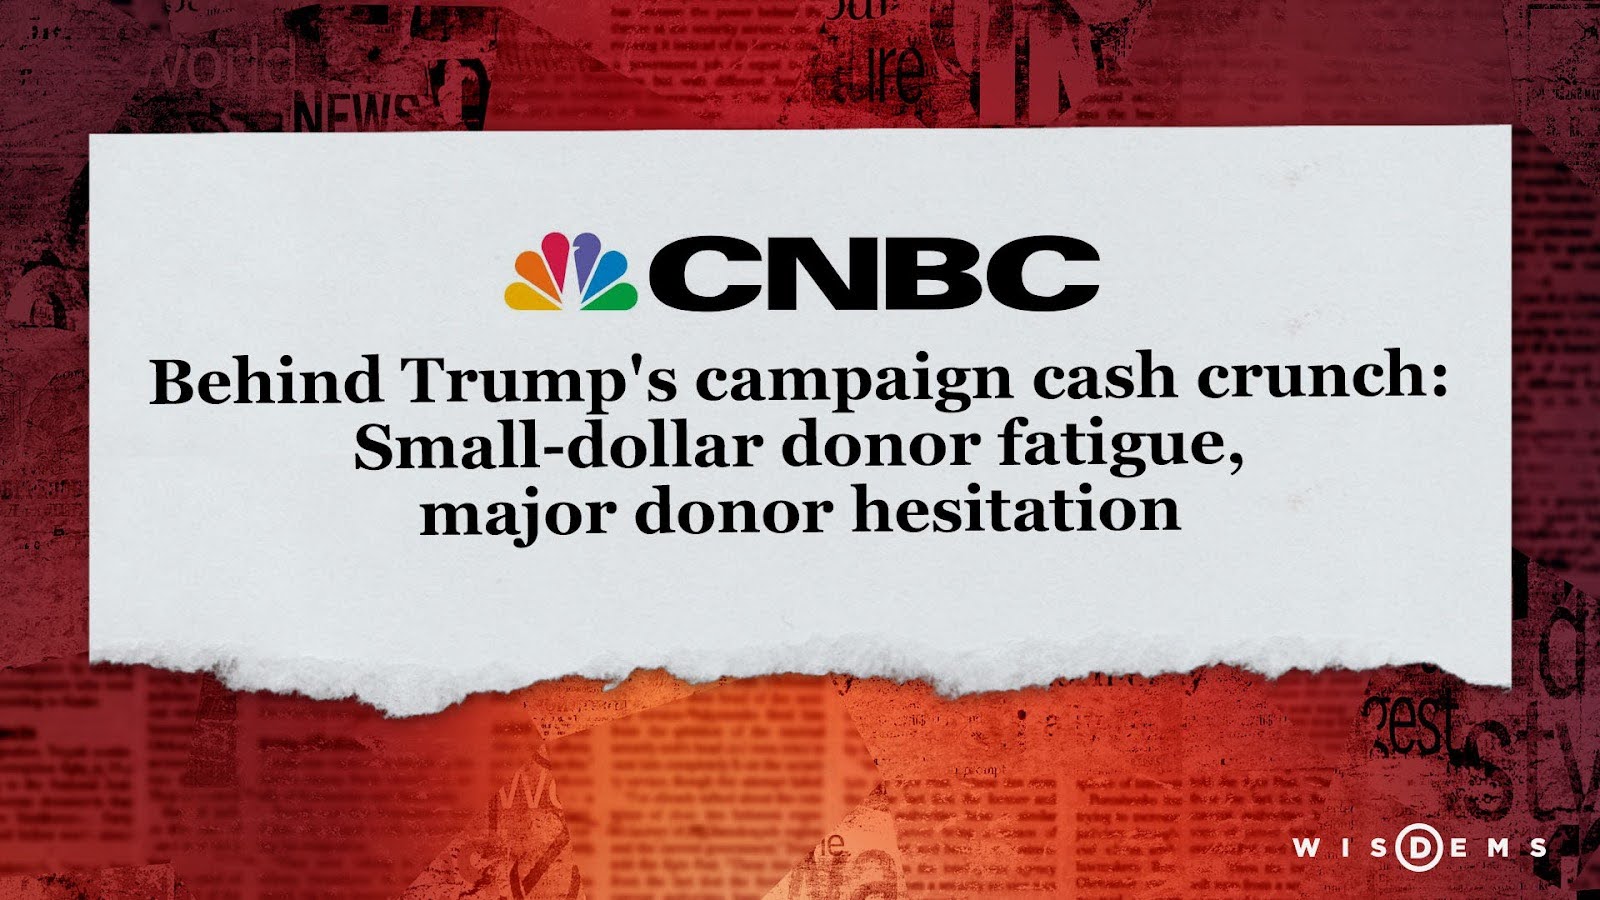 CNB Headline: Behind Trump's campaign cash crunch: Small-dollar donor fatigue, major donor hesitation